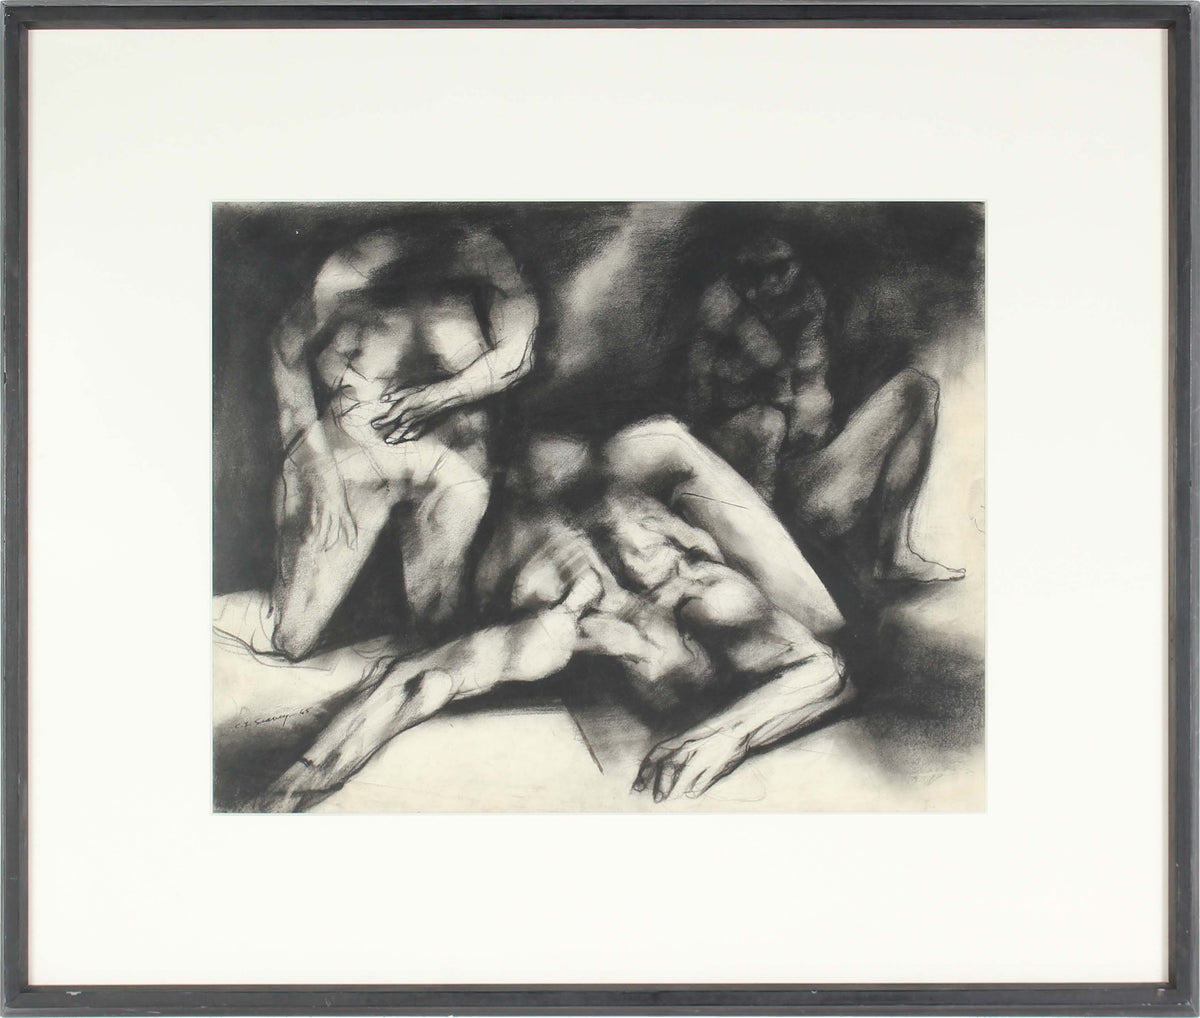 Monochromatic Expressionist Figures&lt;br&gt;Charcoal, 1960s&lt;br&gt;&lt;br&gt;#0418